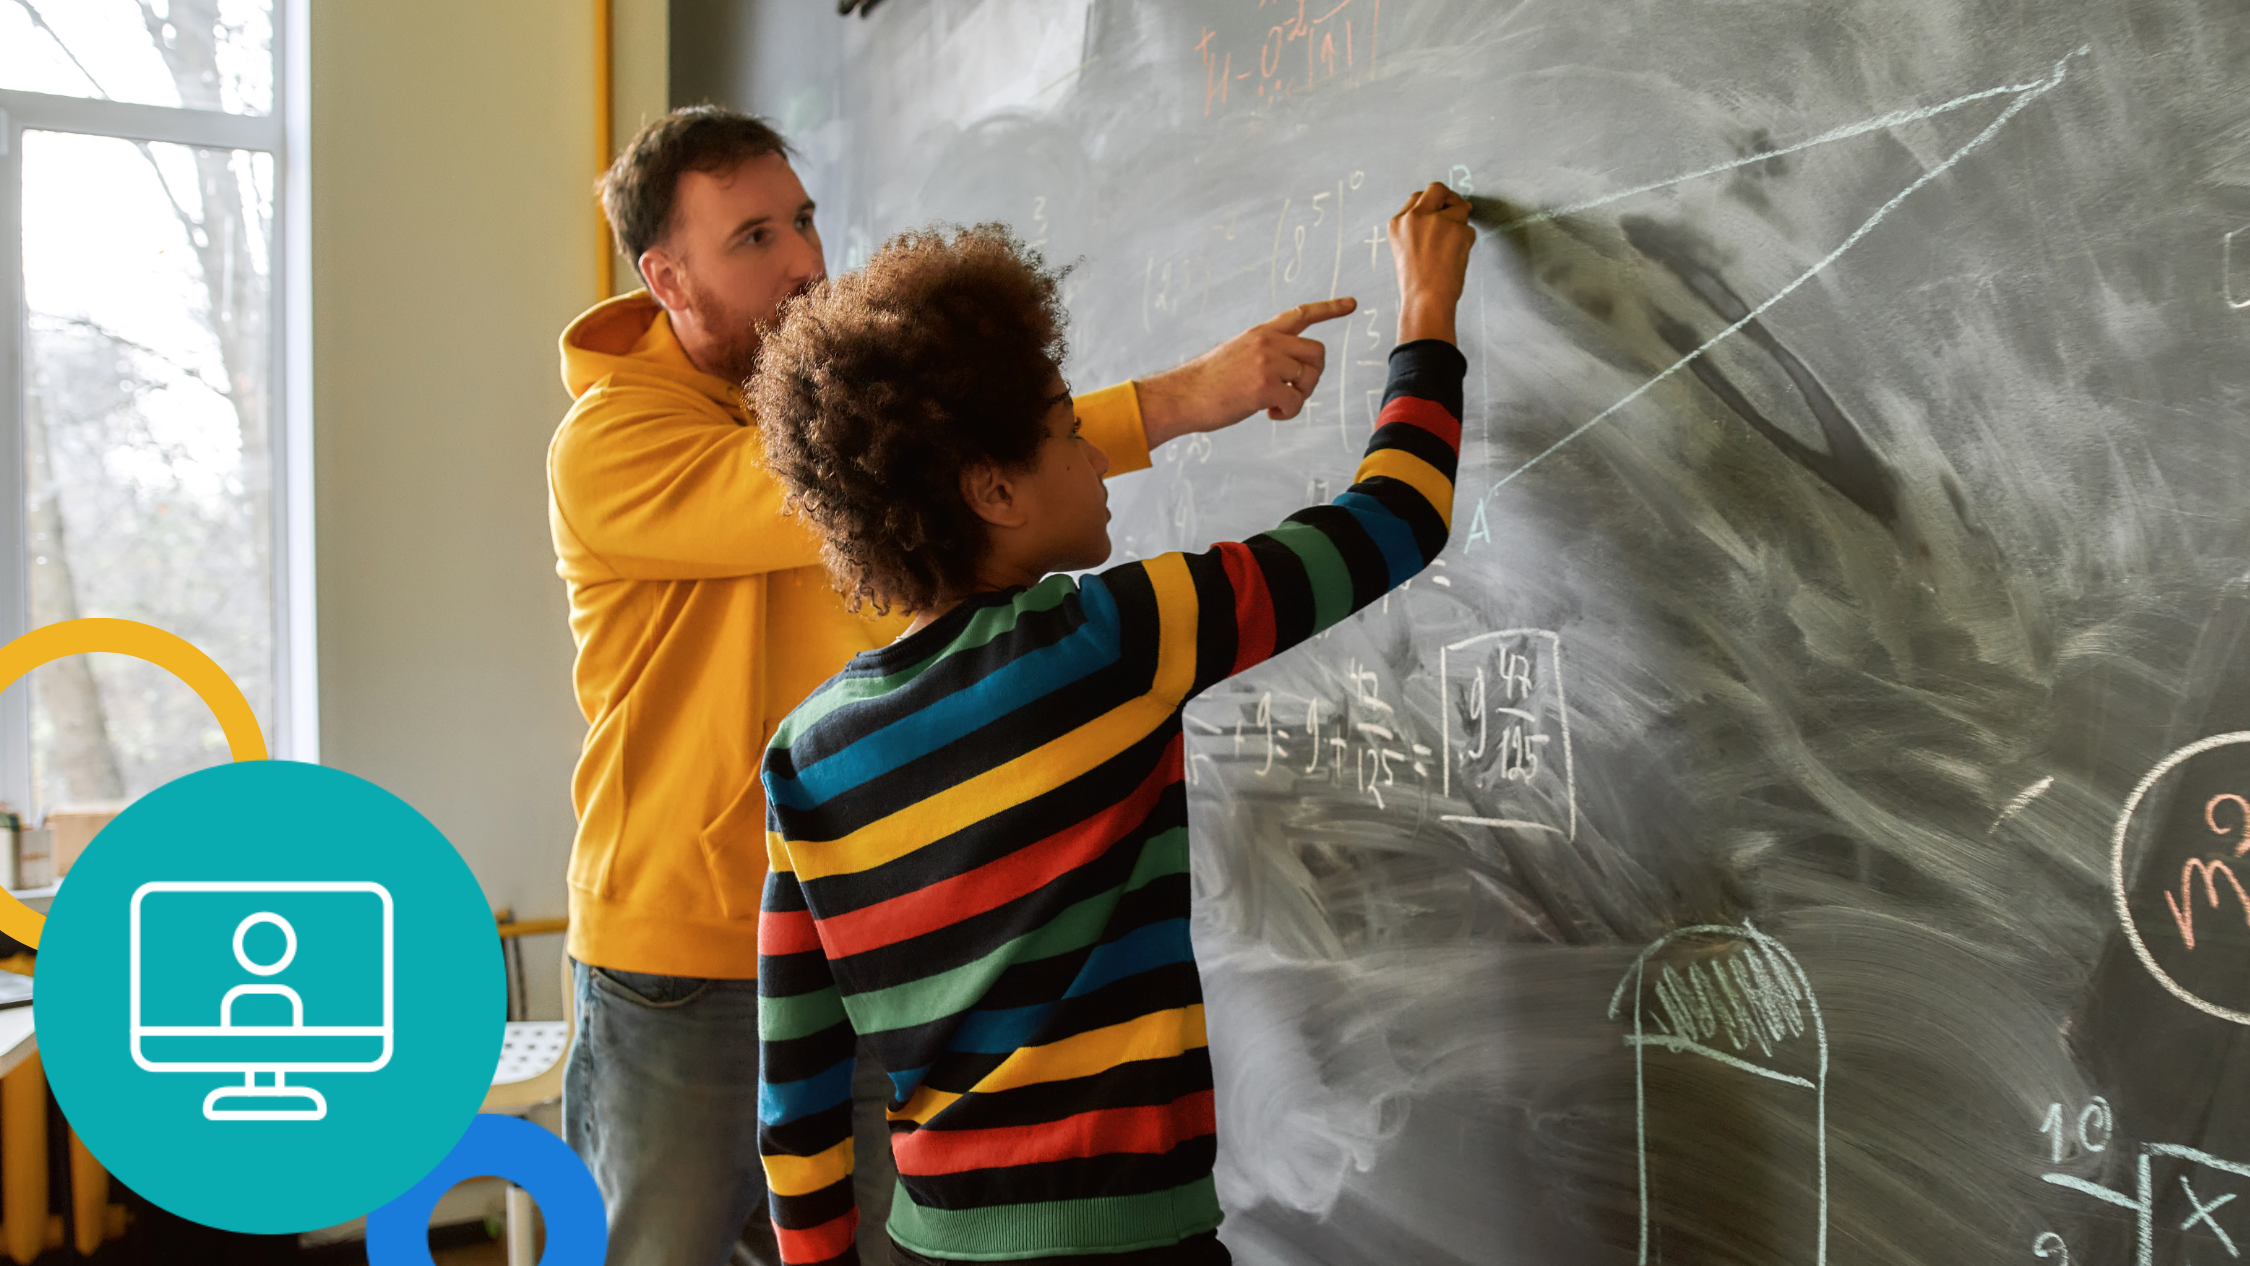 Teacher and student solving math equations on chalkboard webinar